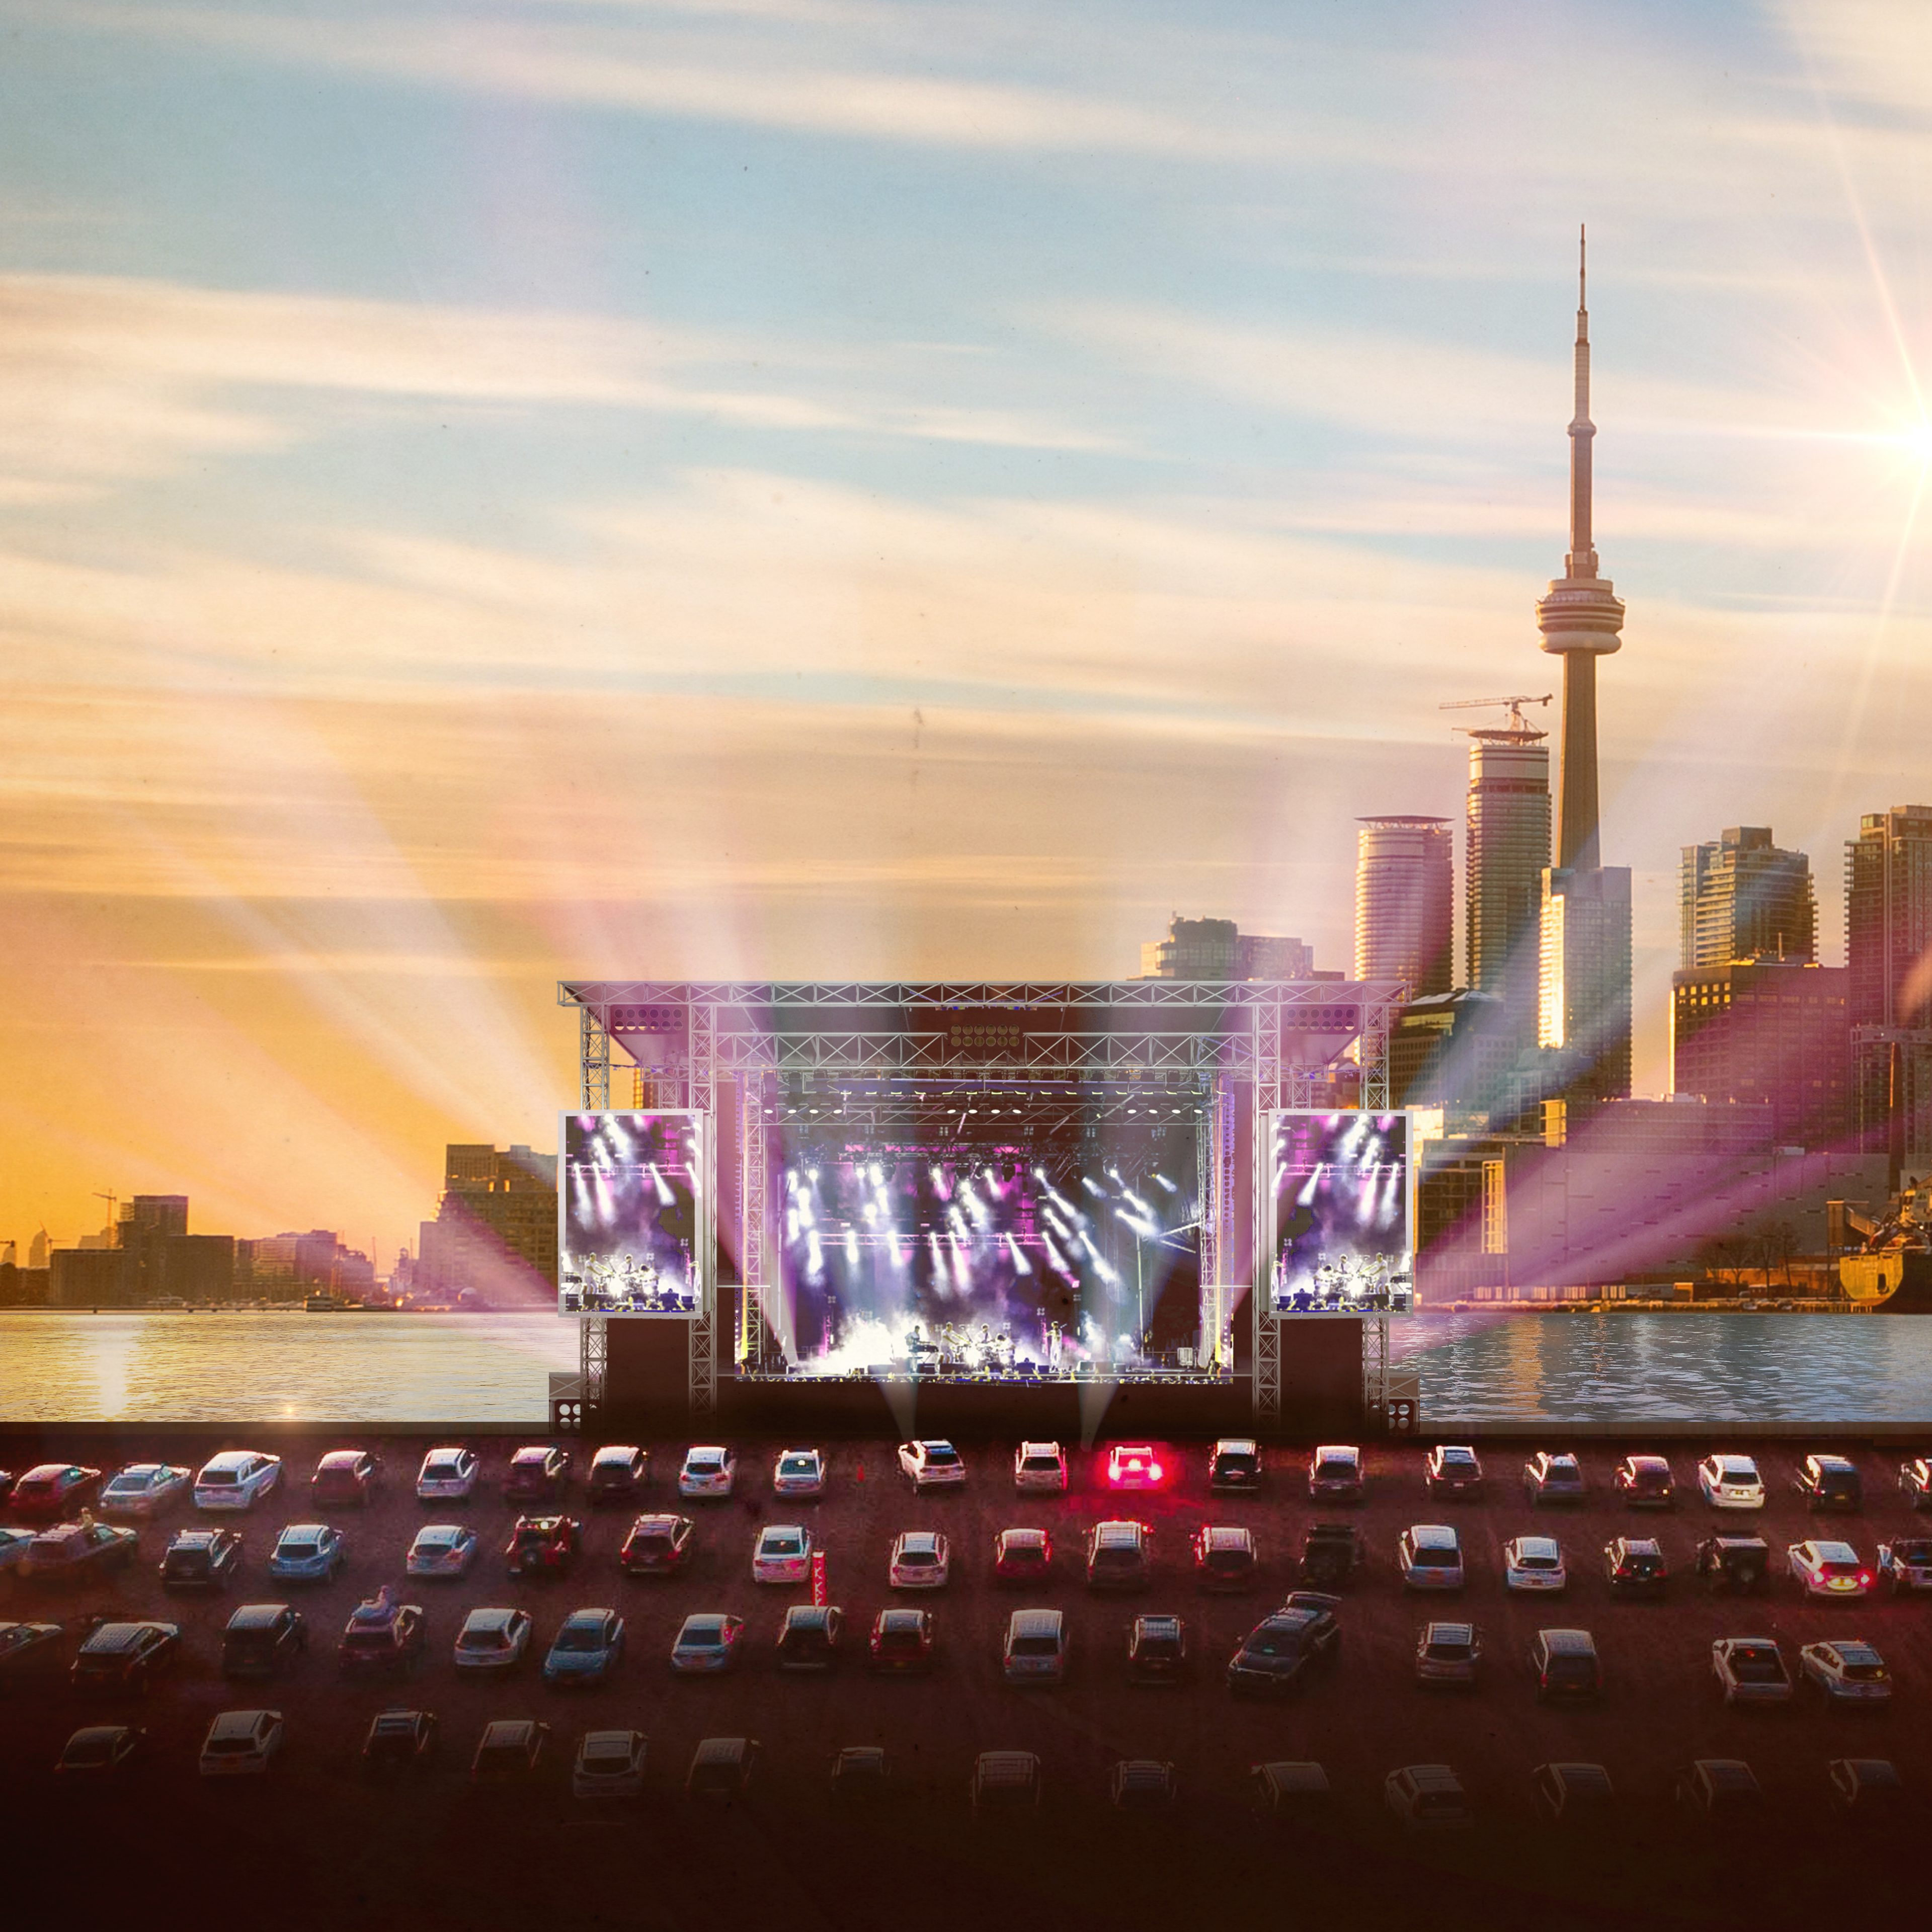 CityView DriveIn Toronto's newest concert & entertainment venue